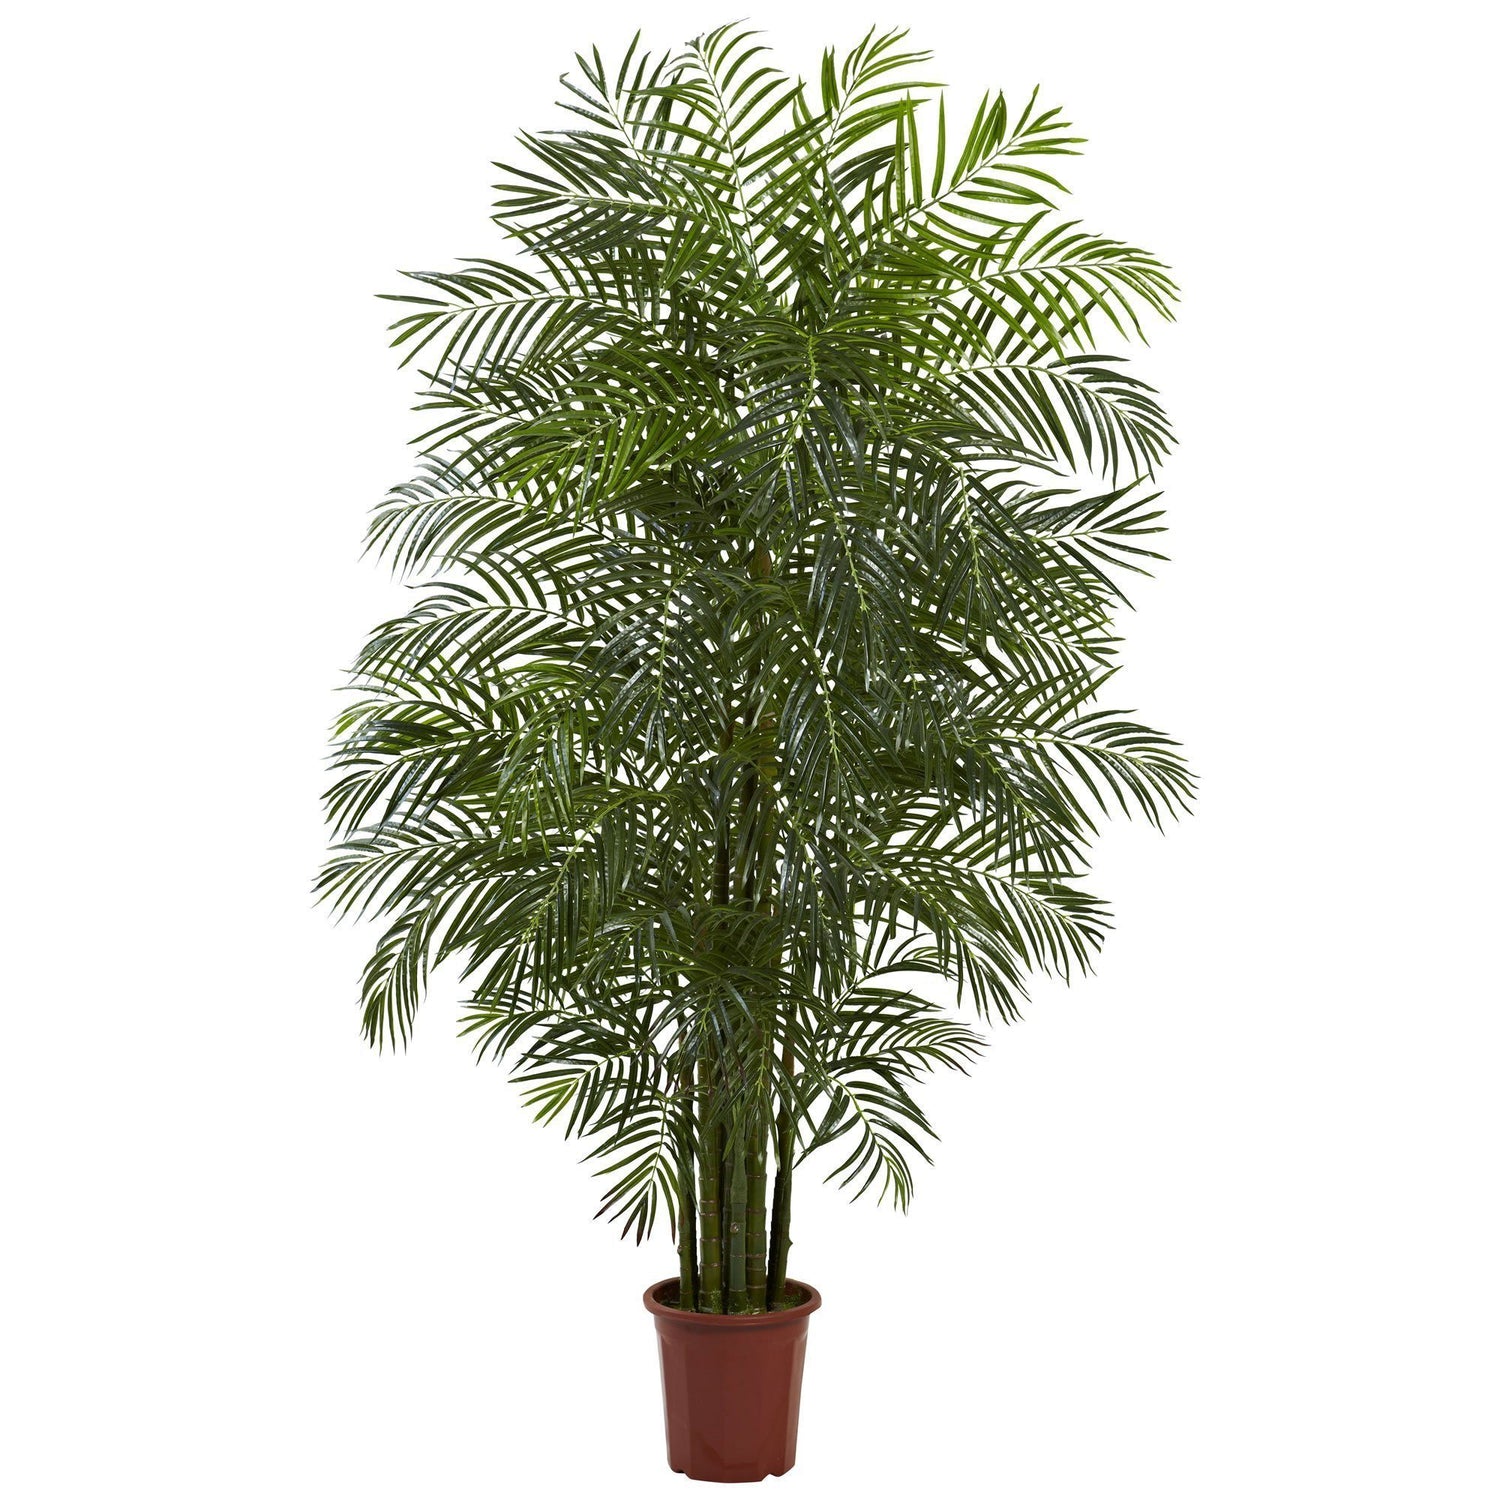 7.5' Areca Palm W/1966 Lvs UV Resistant (Indoor/Outdoor)